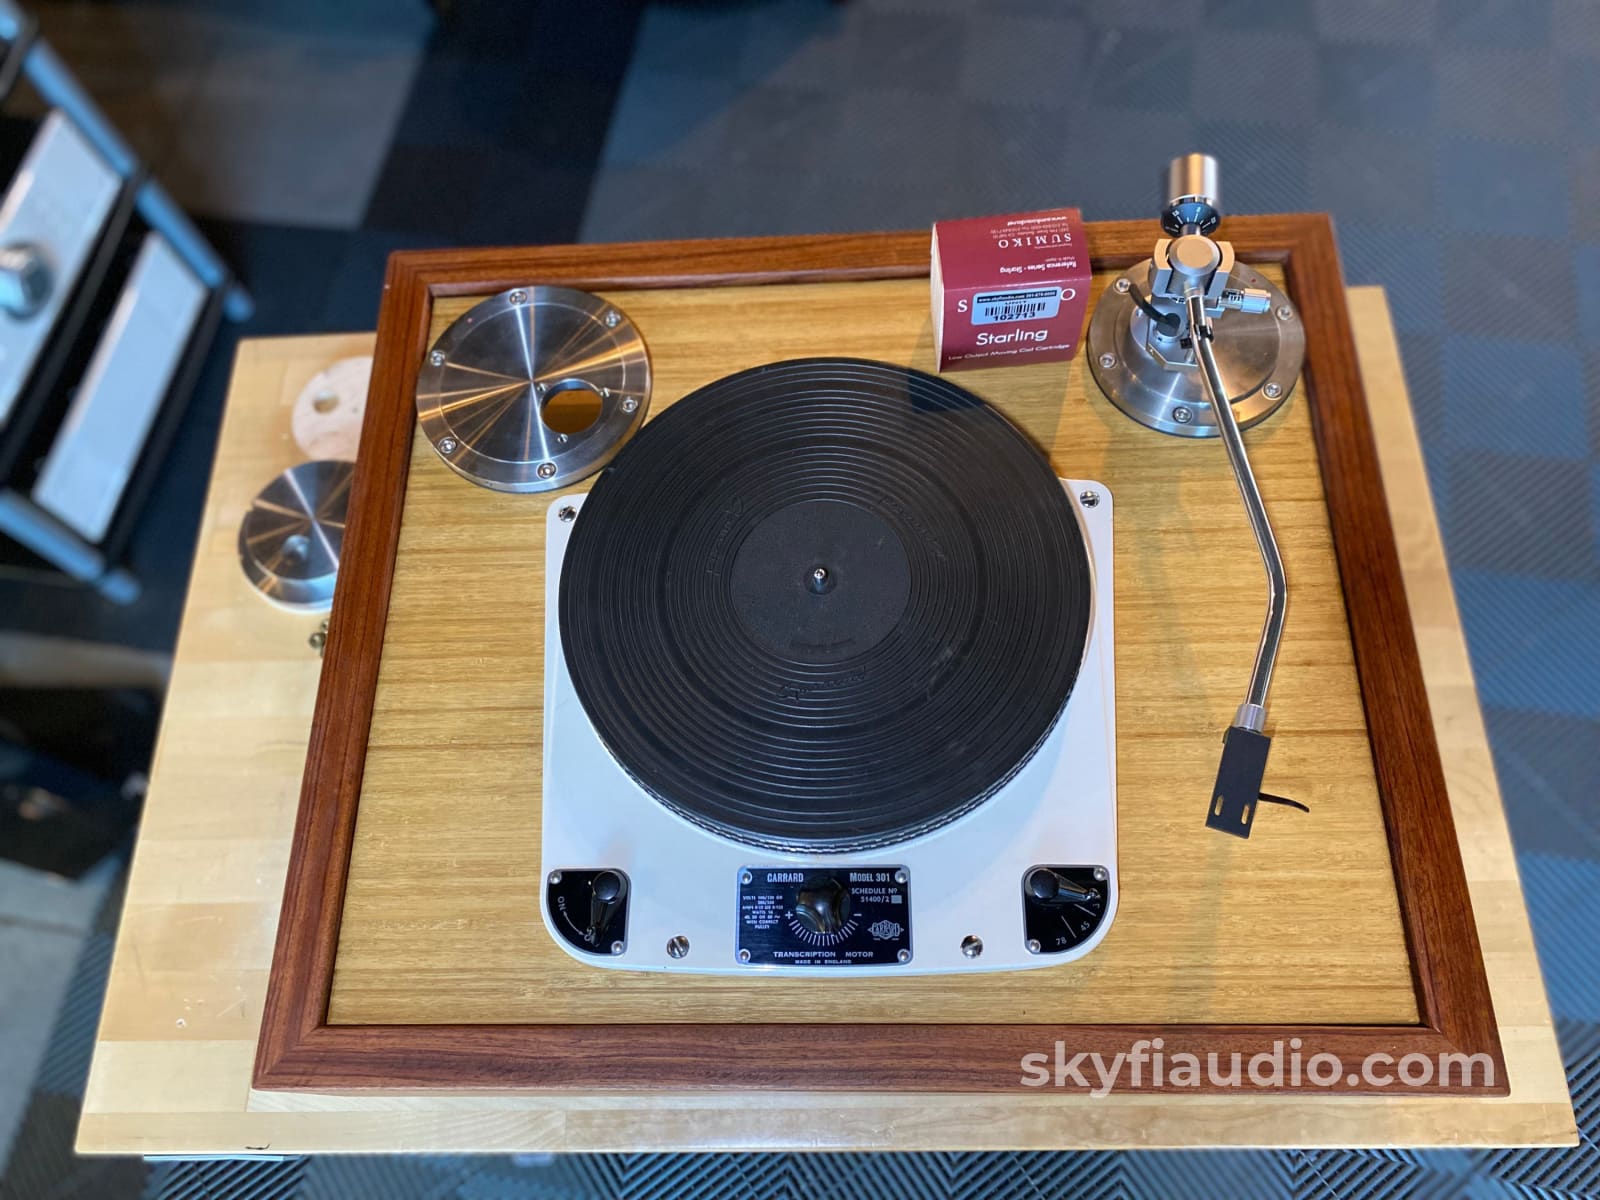 Garrard 301 Skyfi Custom Dual Tonearm Turntable With 12 Abis Arm And New Sumiko Starling